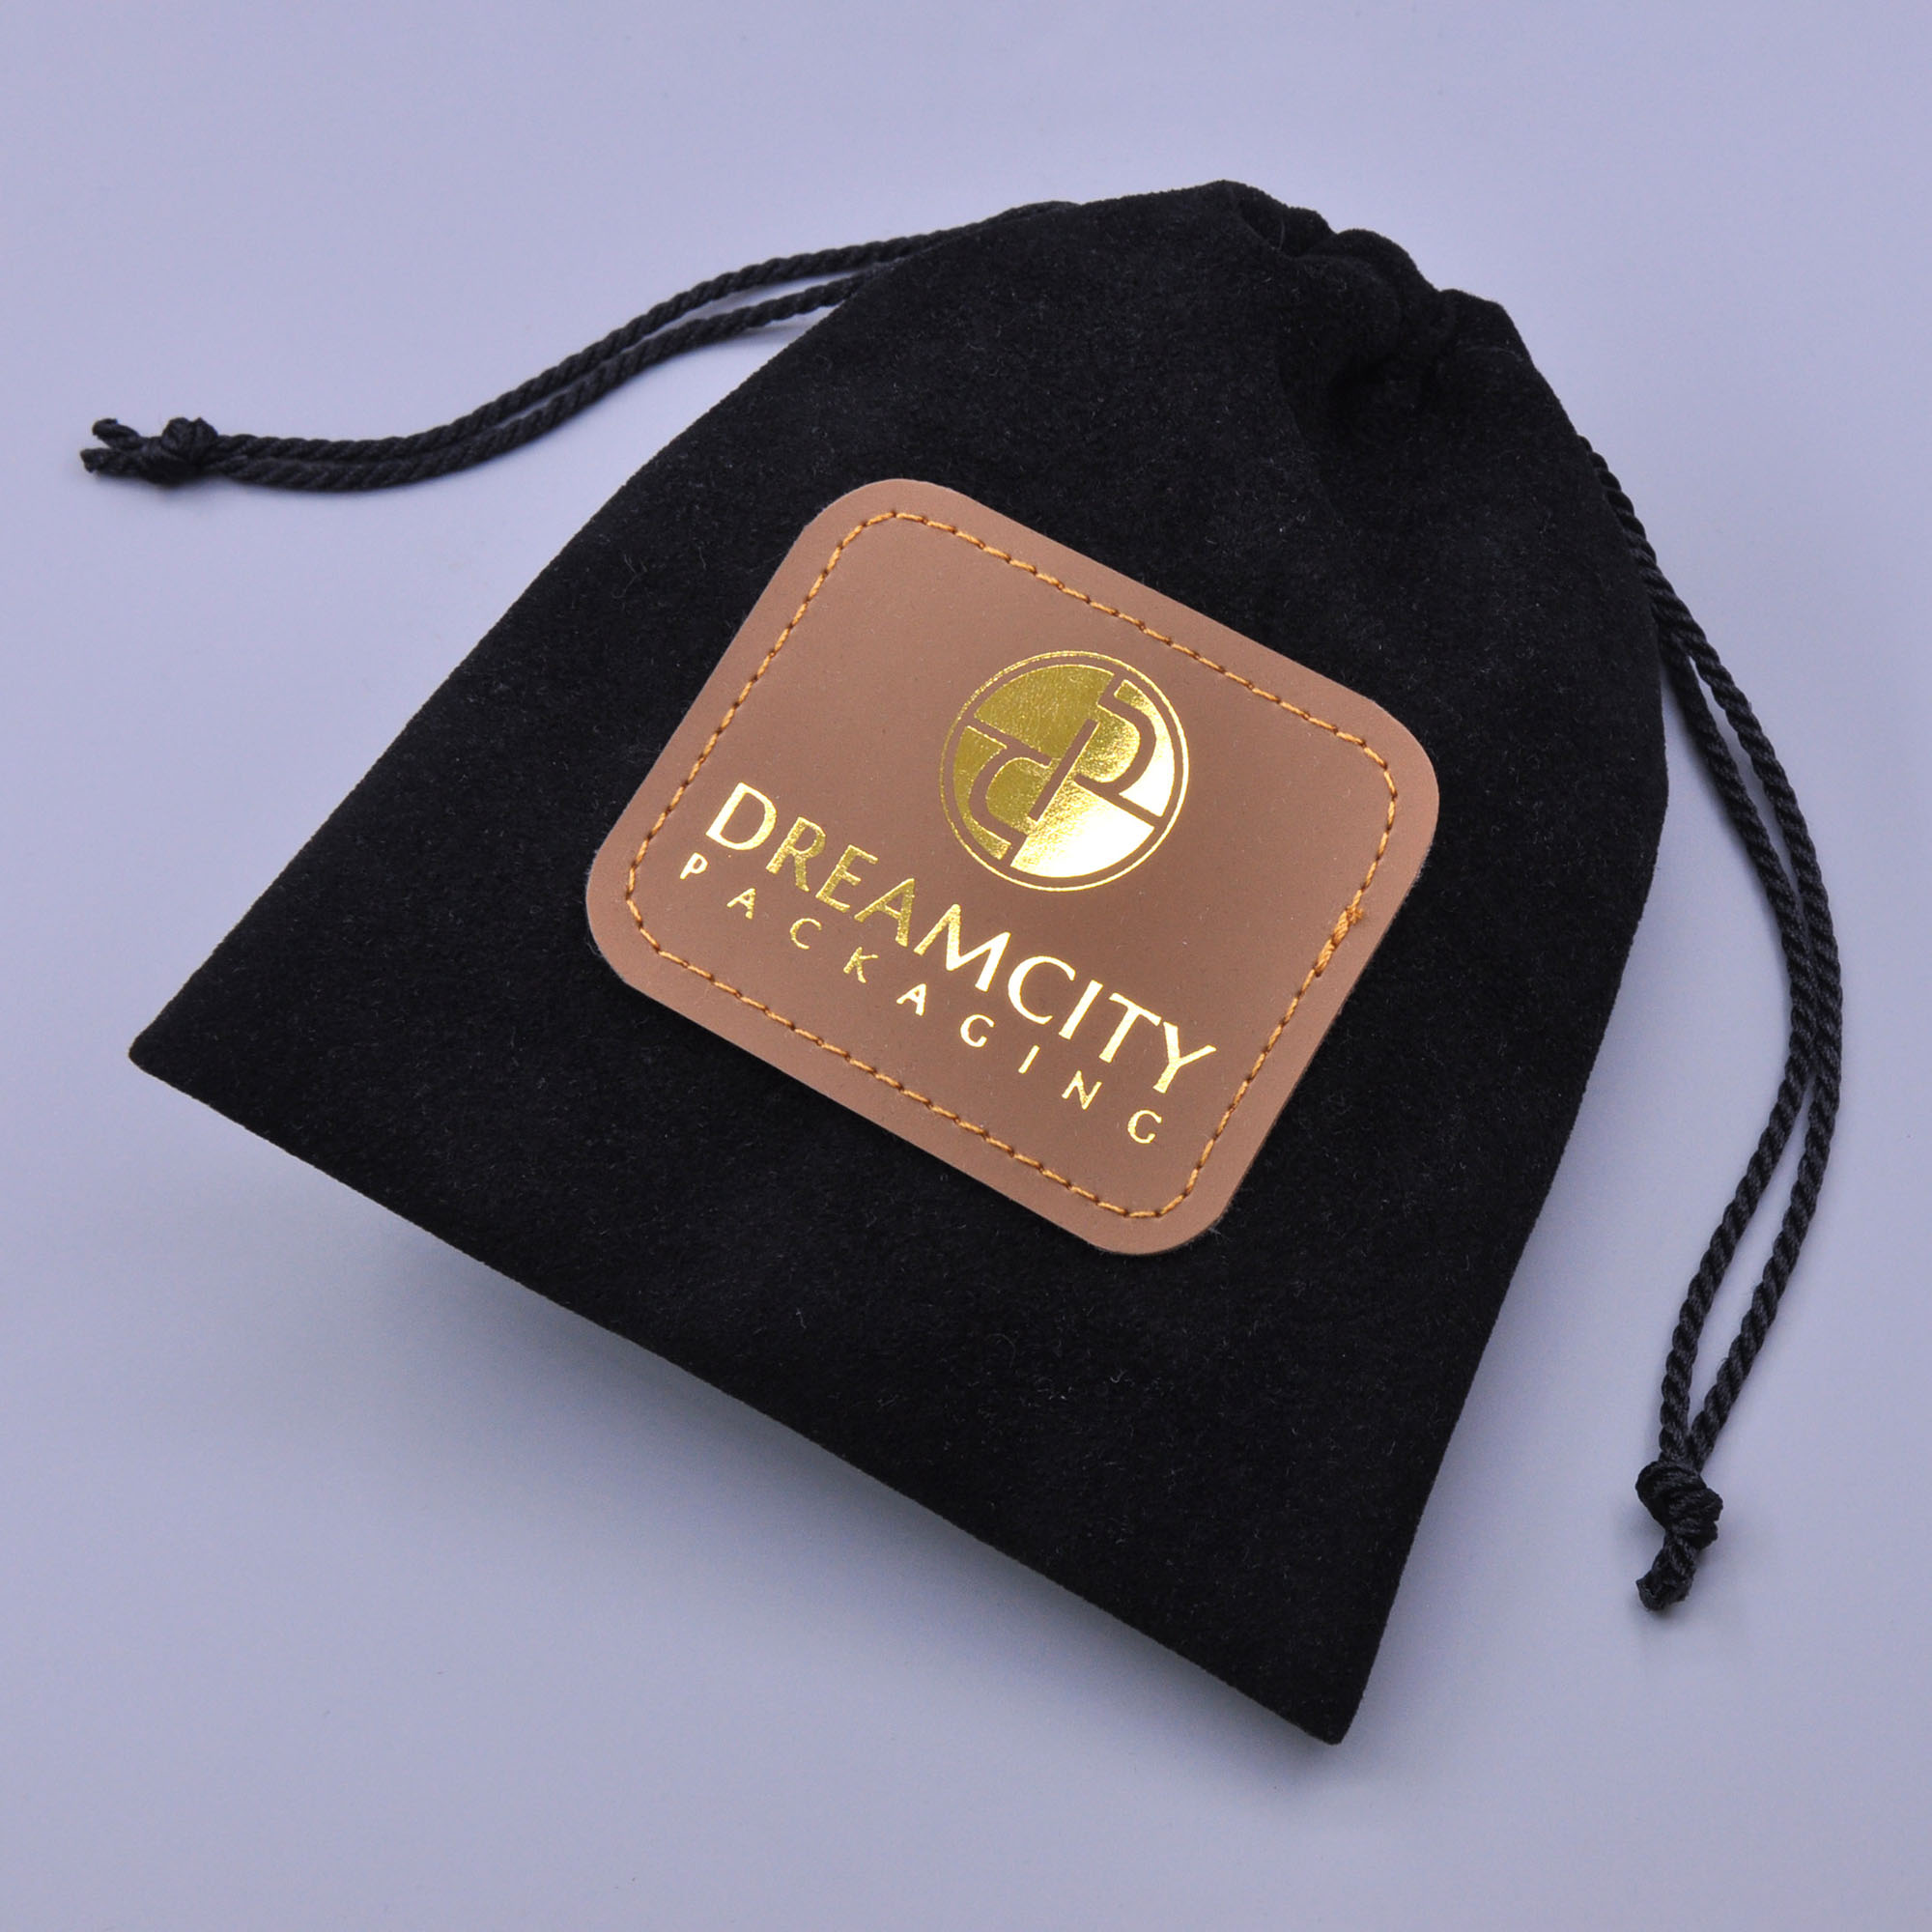 Branded Velvet Drawstring Bag with Stamped Foil Logo